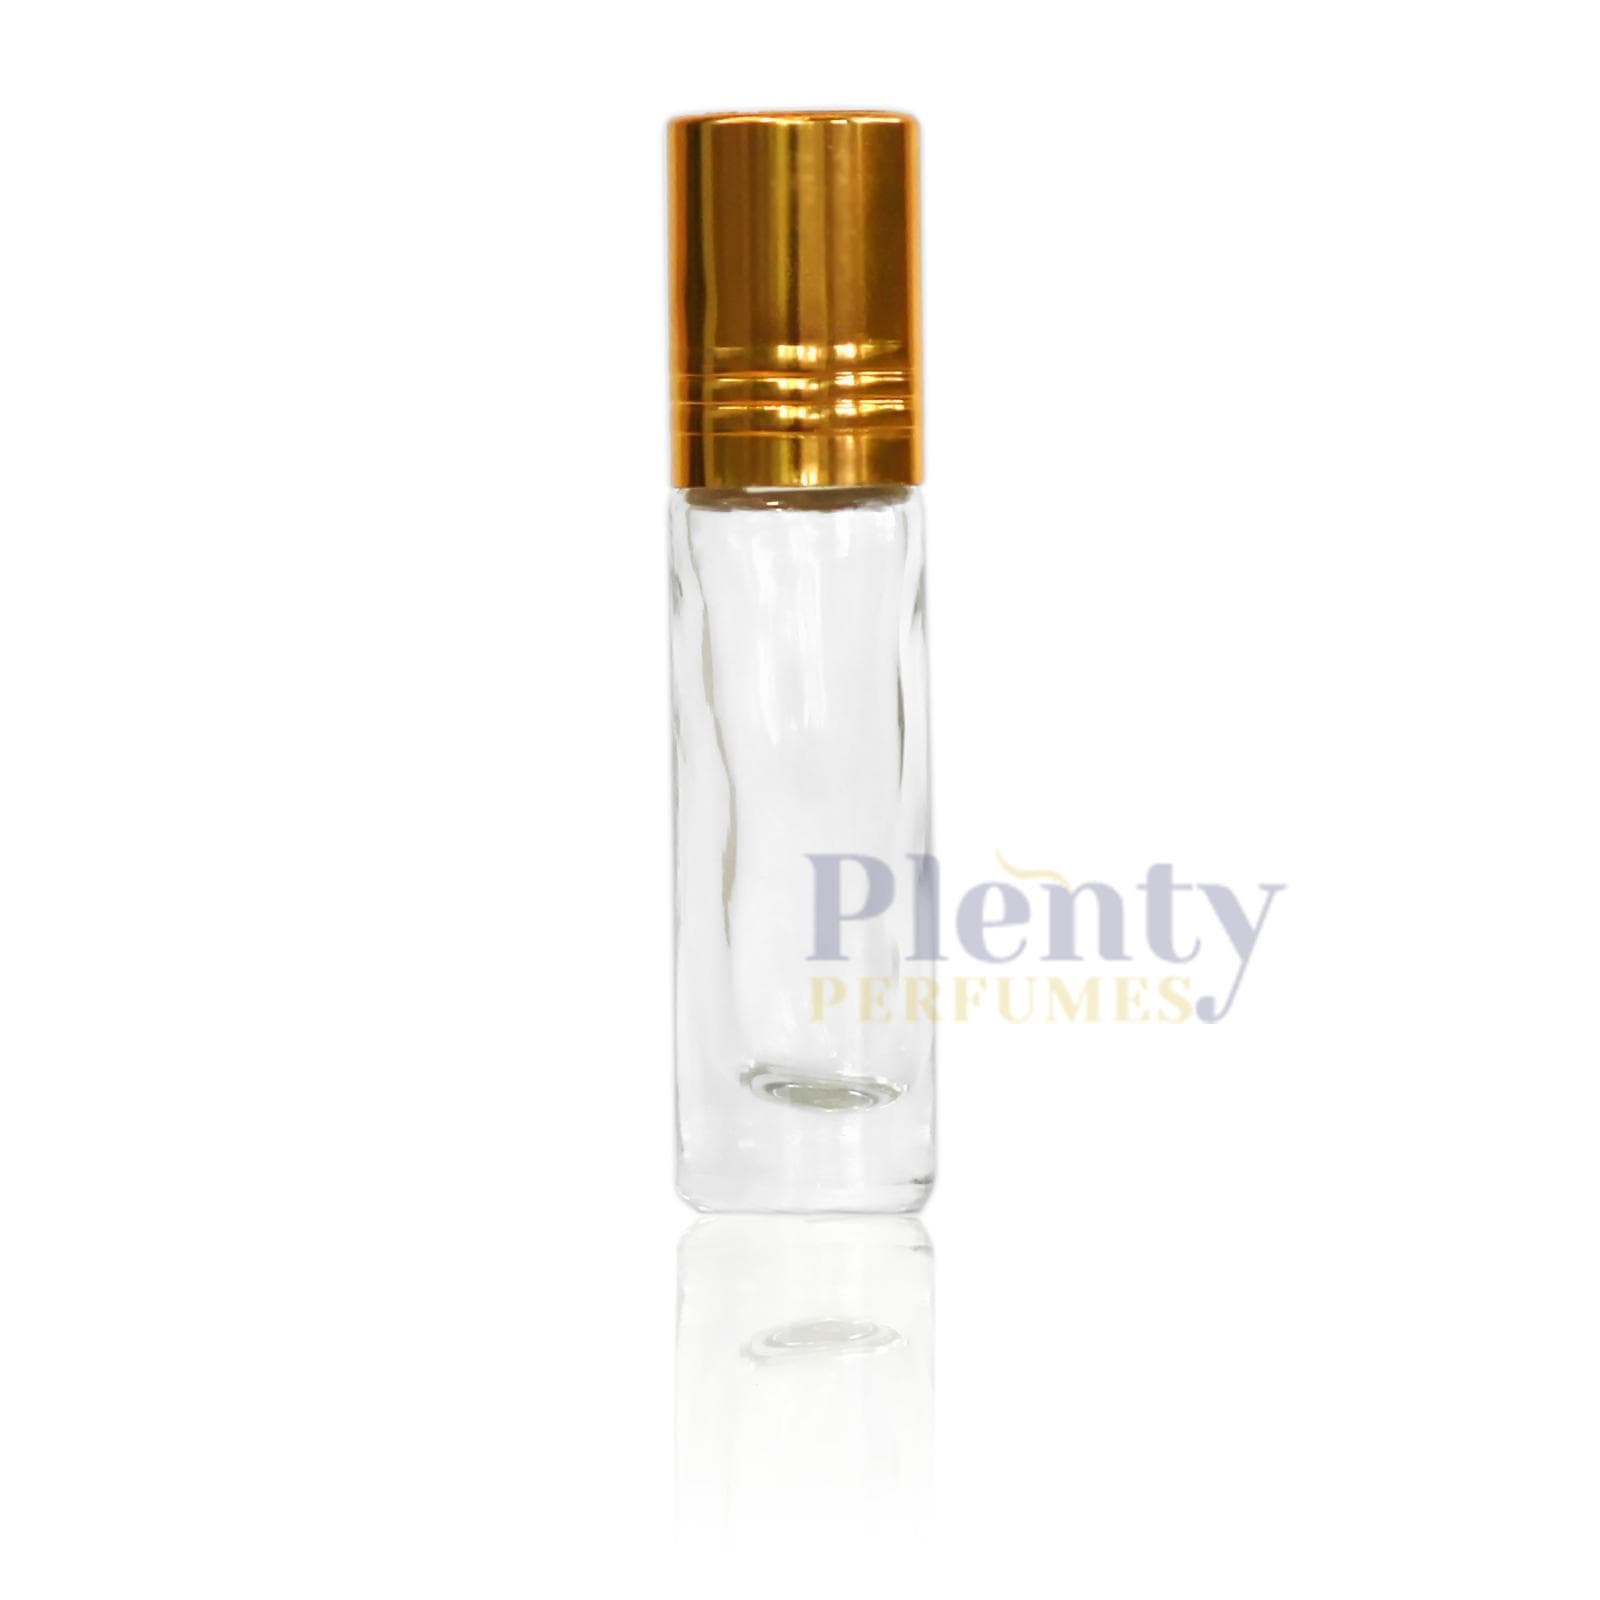 White Oudh By Al Haramain Perfume Oil - Plenty Perfumes